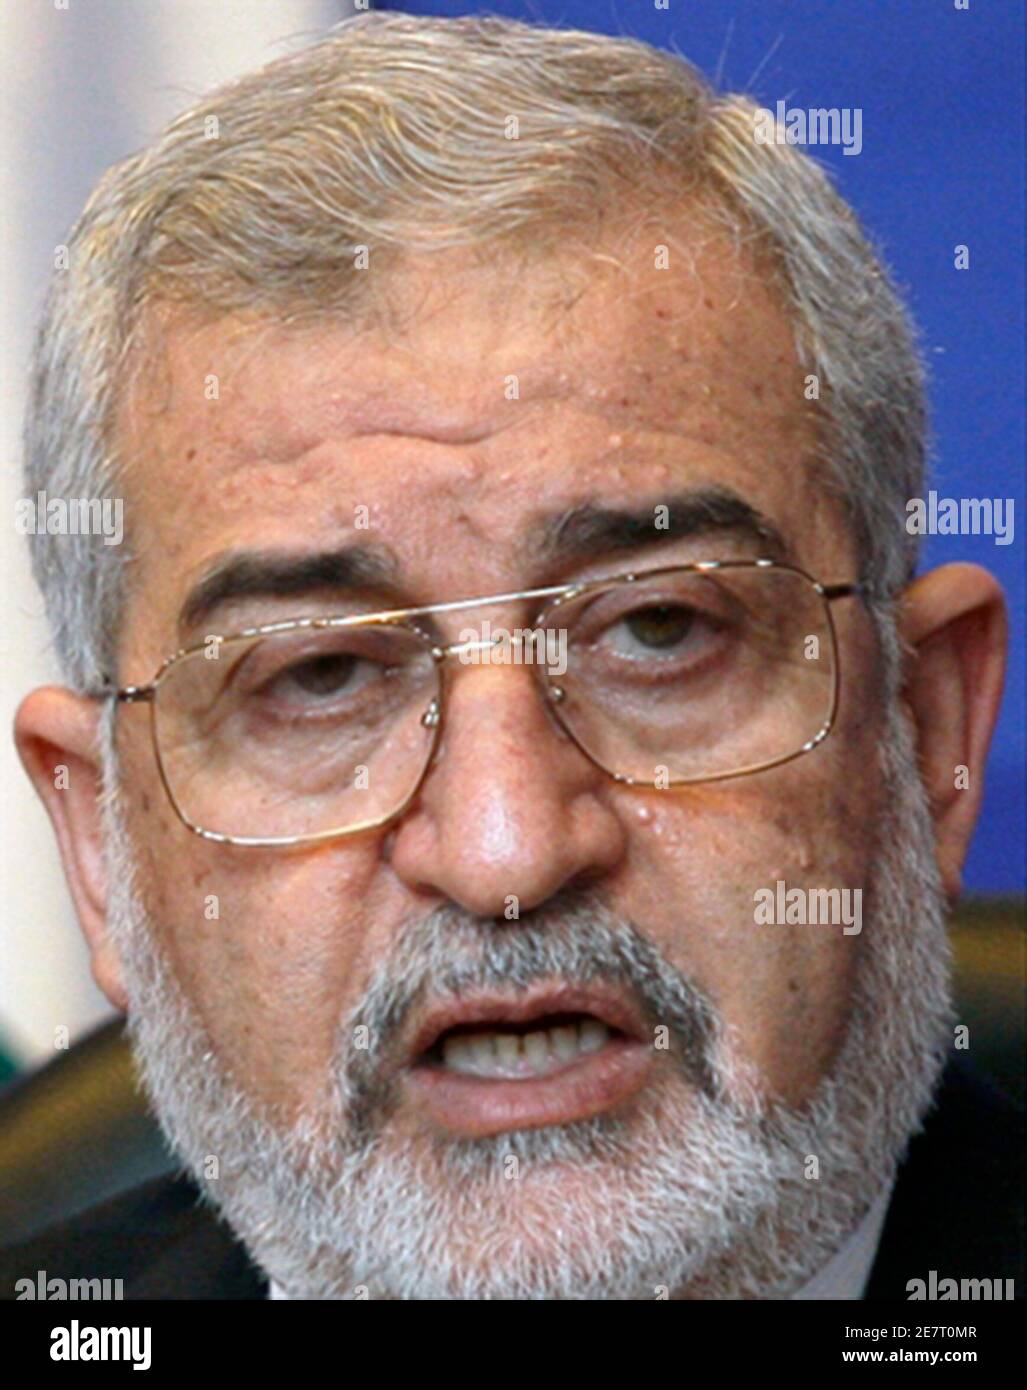 Undated file photo shows Iraqi parliament speaker Ayad al-Samarai, a candidate for Iraq's March 7, 2010 parliamentary election. REUTERS/Staff/Files (IRAQ - Tags: POLITICS ELECTIONS HEADSHOT) Stock Photo